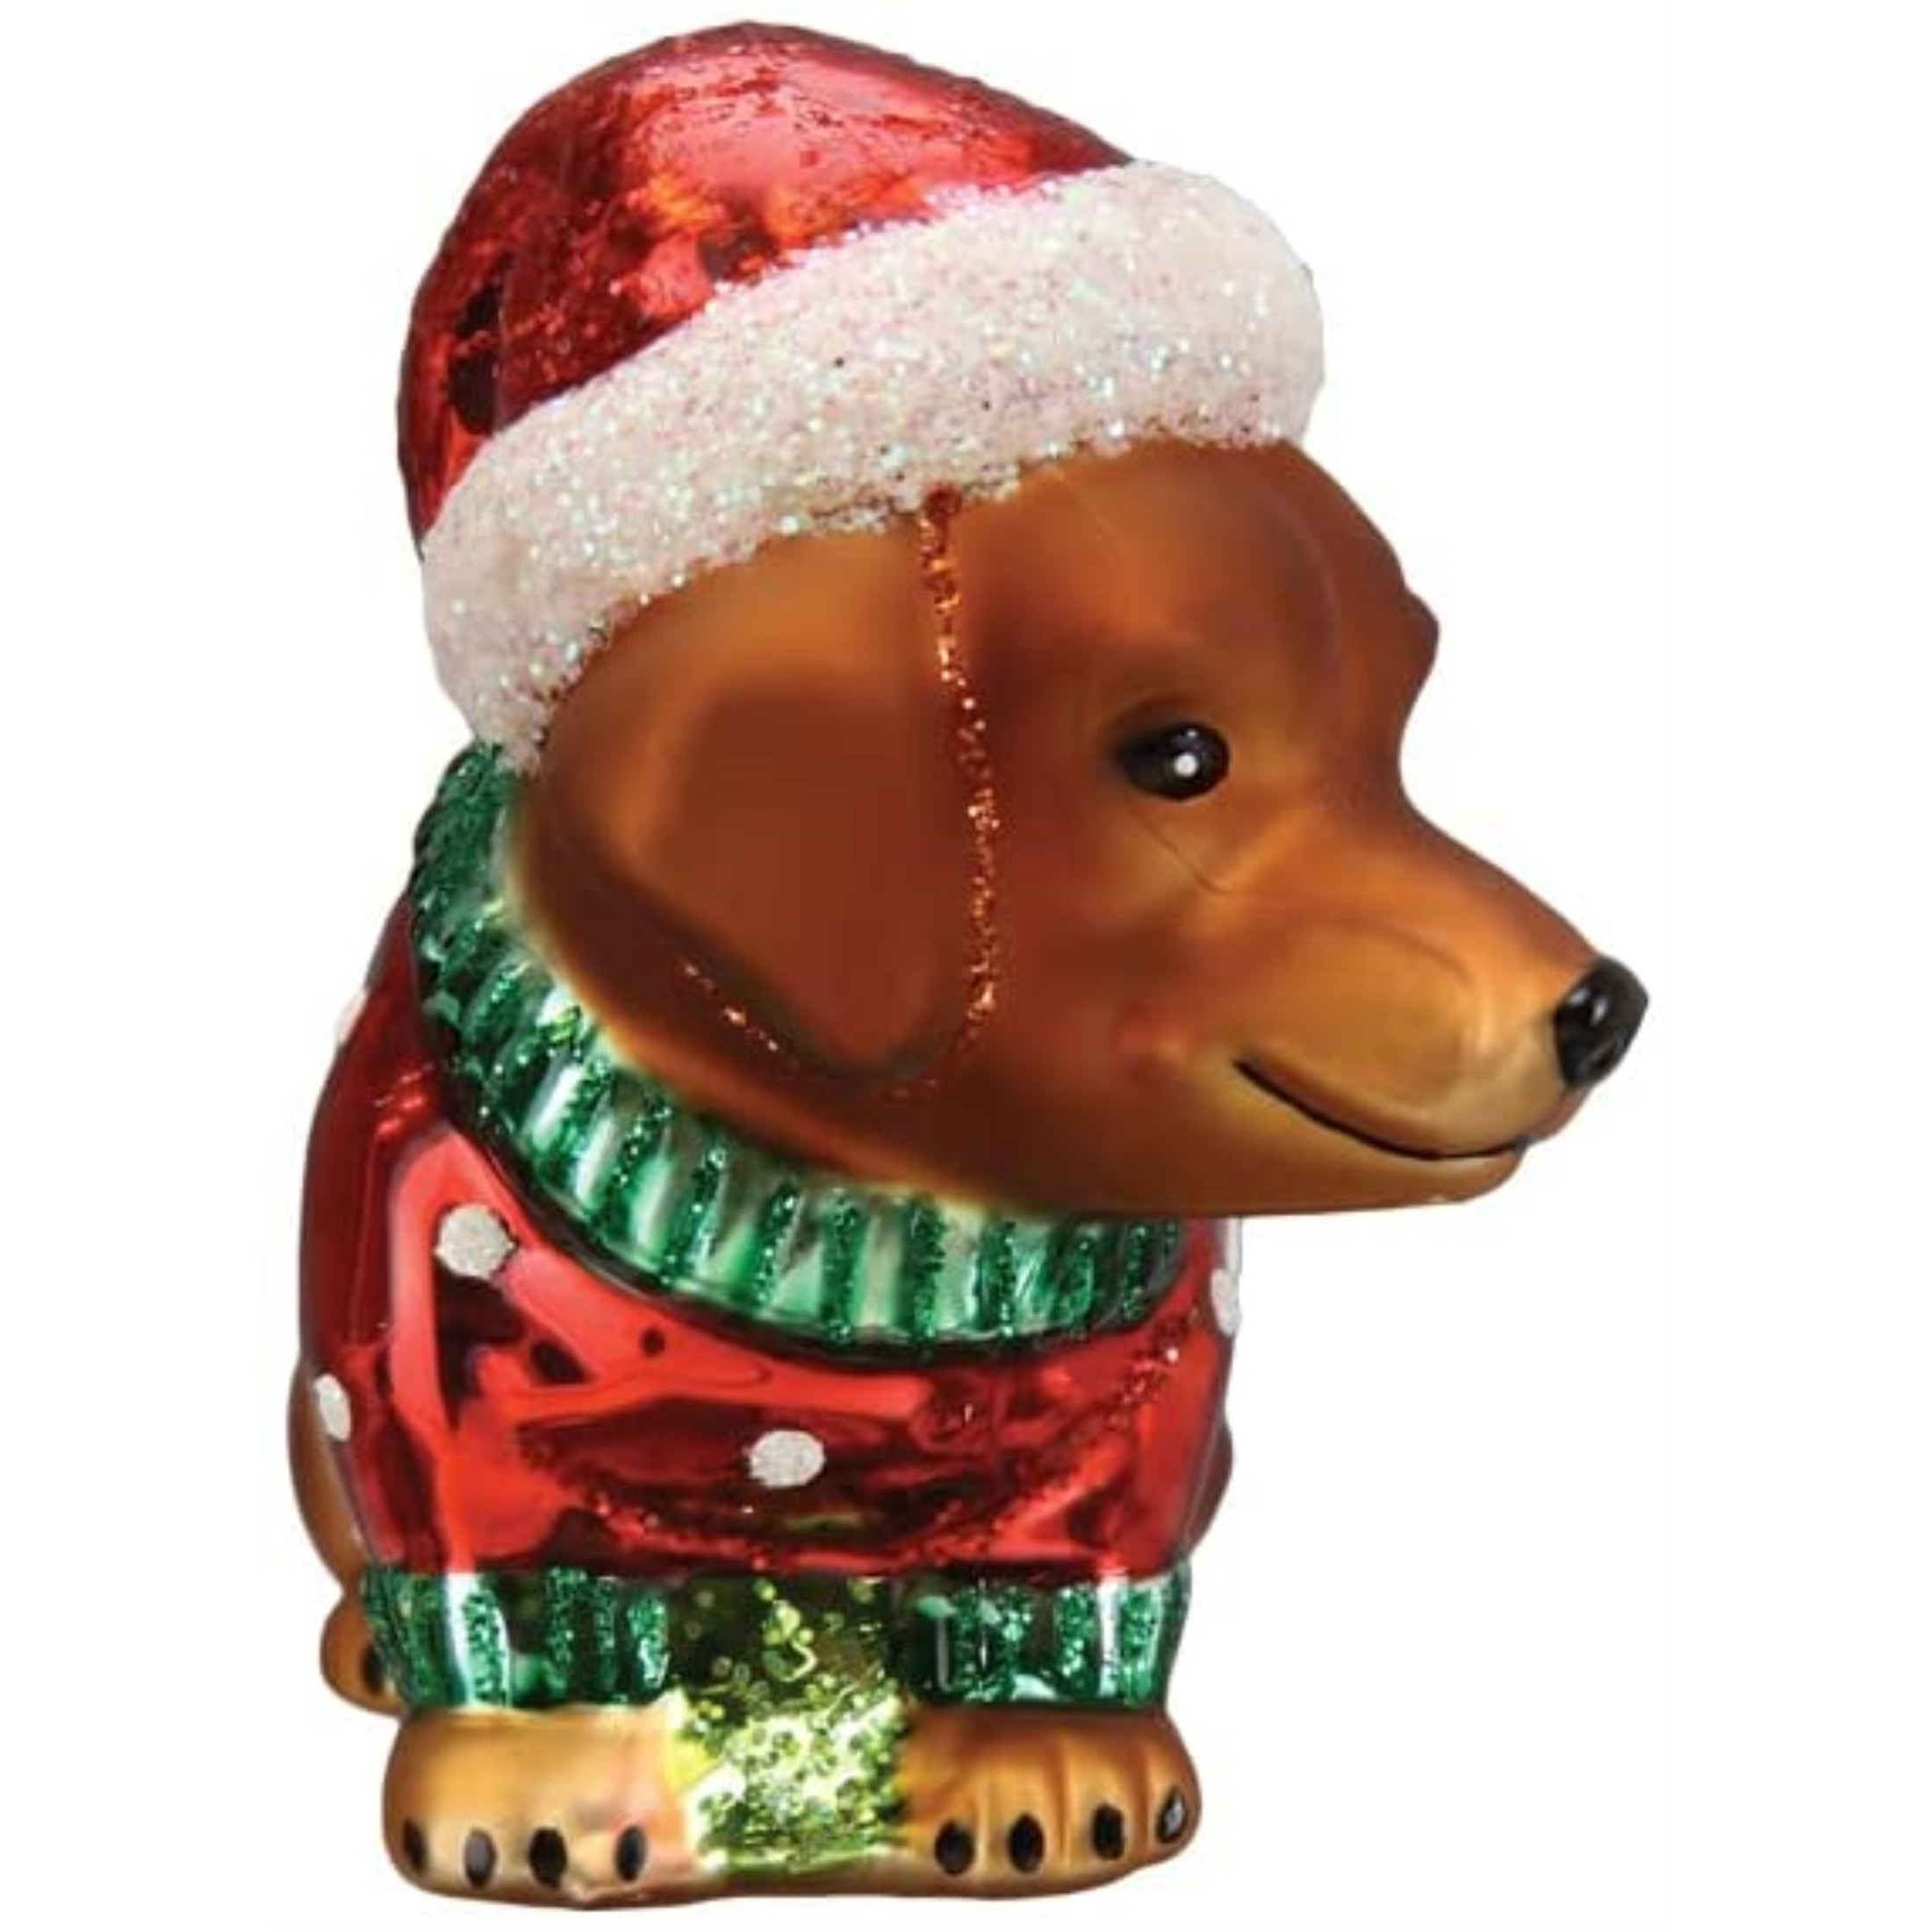 Old World Christmas Blown Glass Christmas Ornament, Dashing Dachshund Puppy